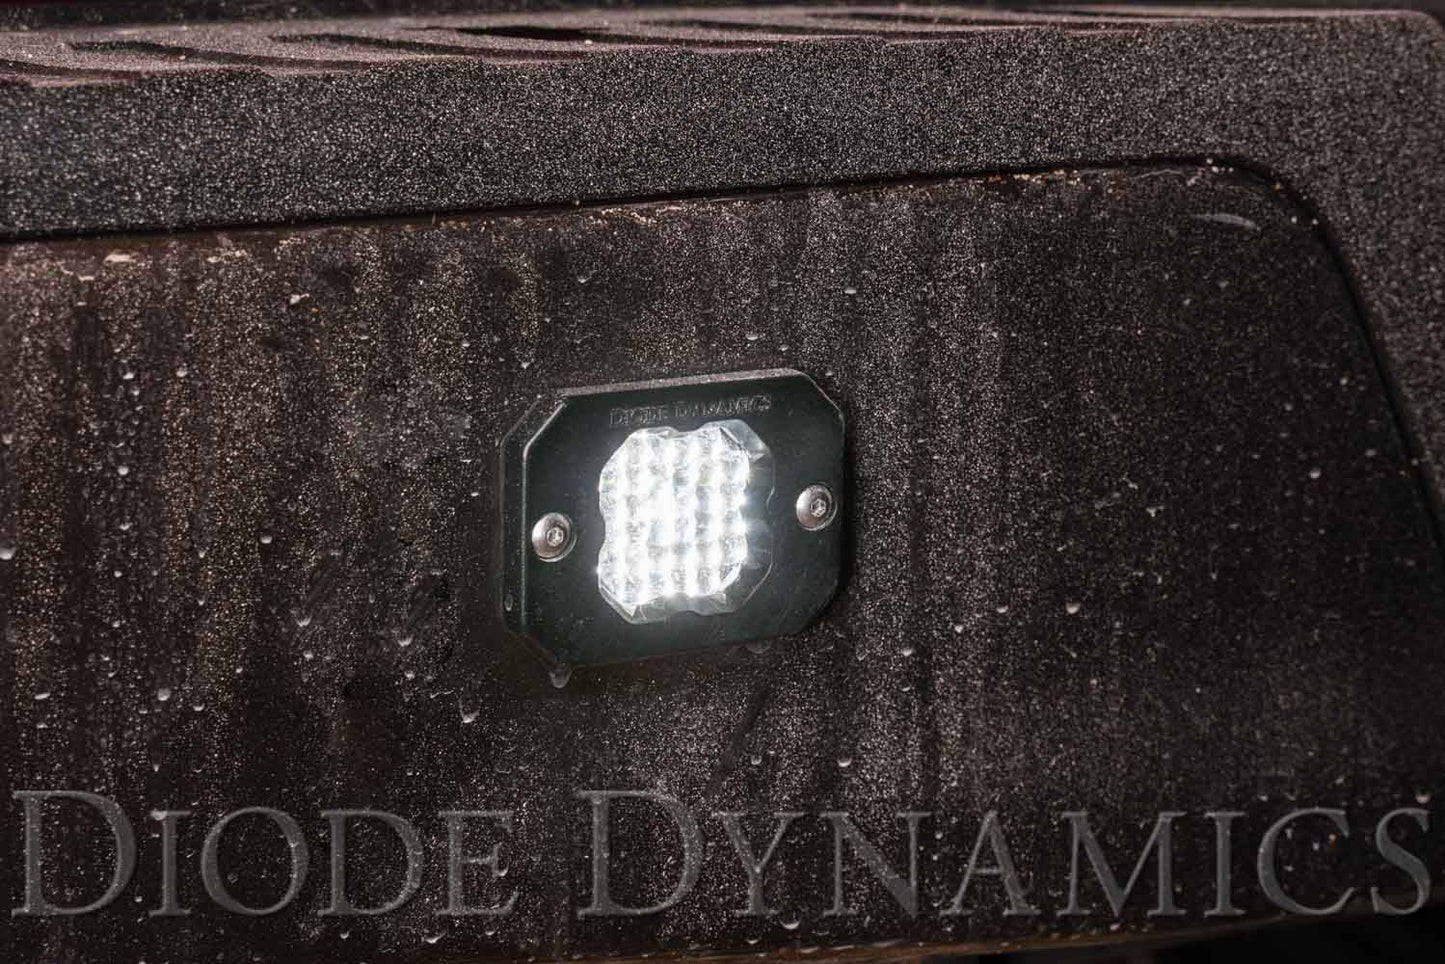 Diode Dynamics - Stage Series C1 Flush Mount LED Pod